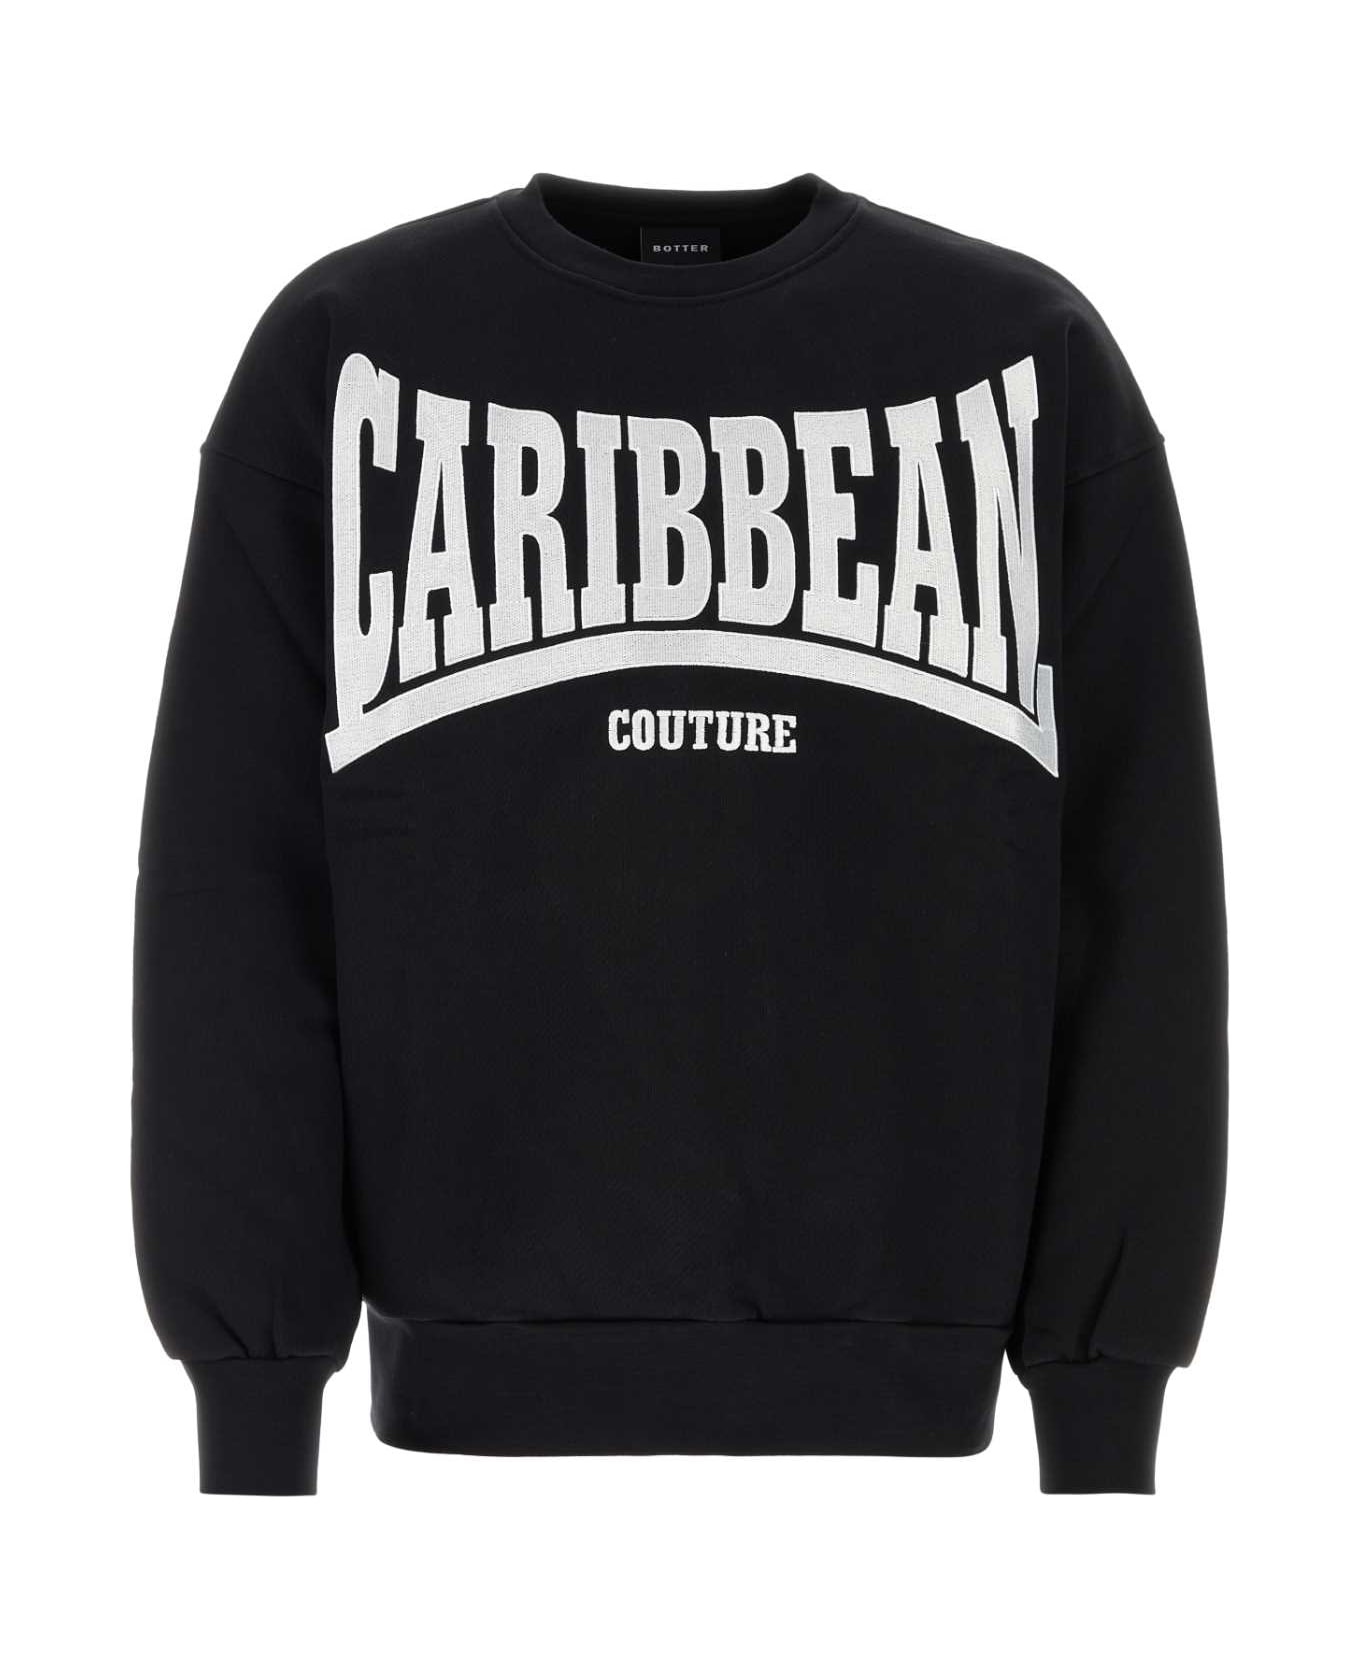 Botter Black Cotton Sweatshirt - BLACK CARIBBEAN COUTURE EMBR フリース